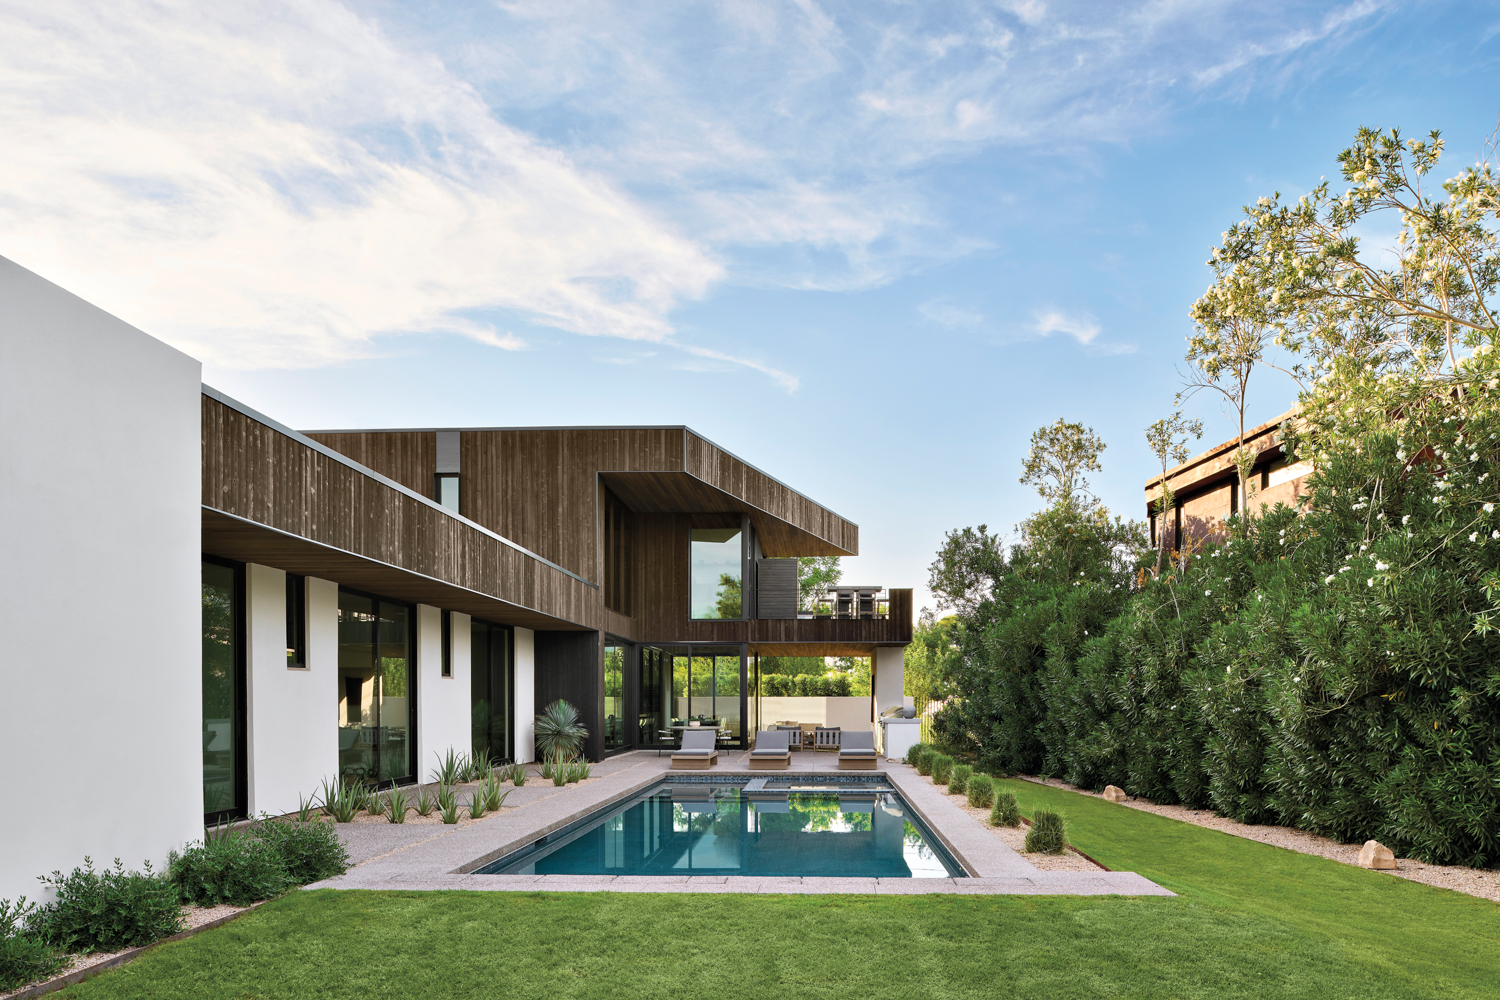 A modern home with a backyard pool.